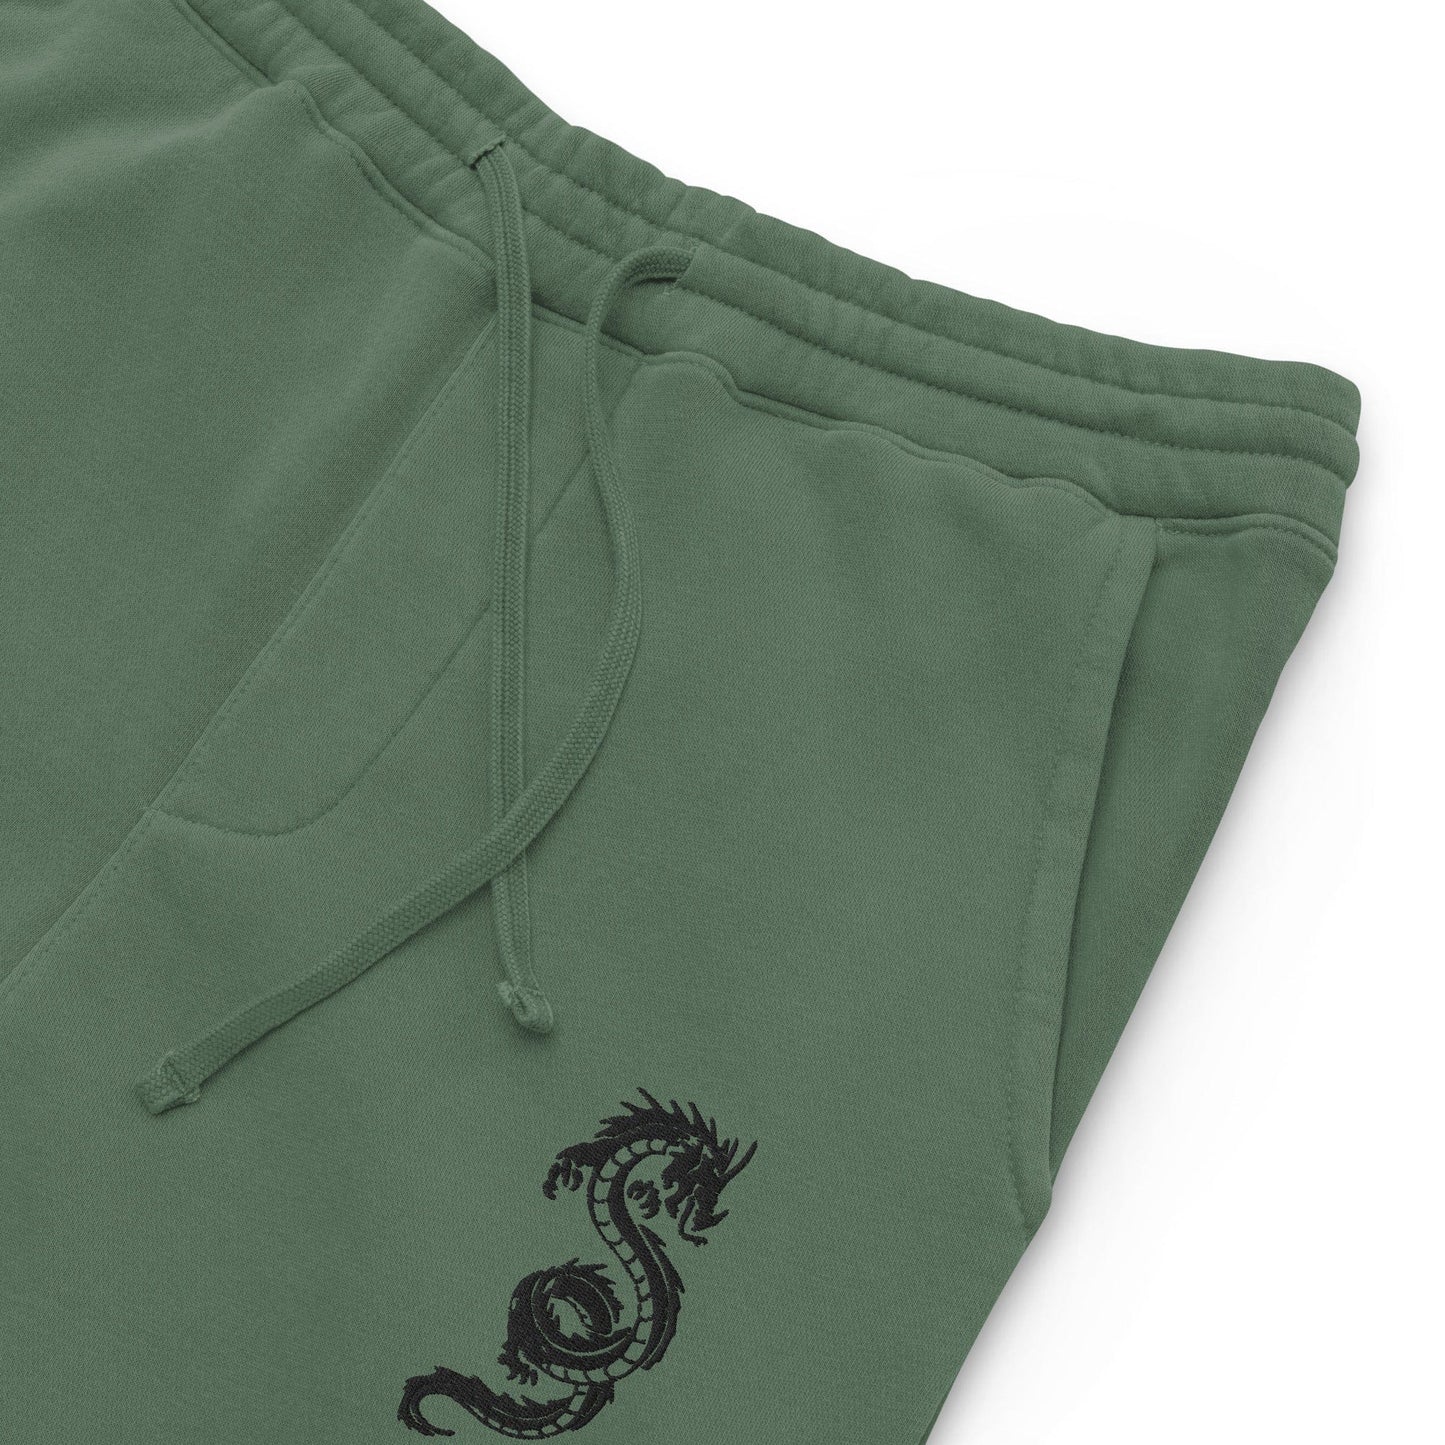 ElysMode Dragon Pigment-dyed sweatpants